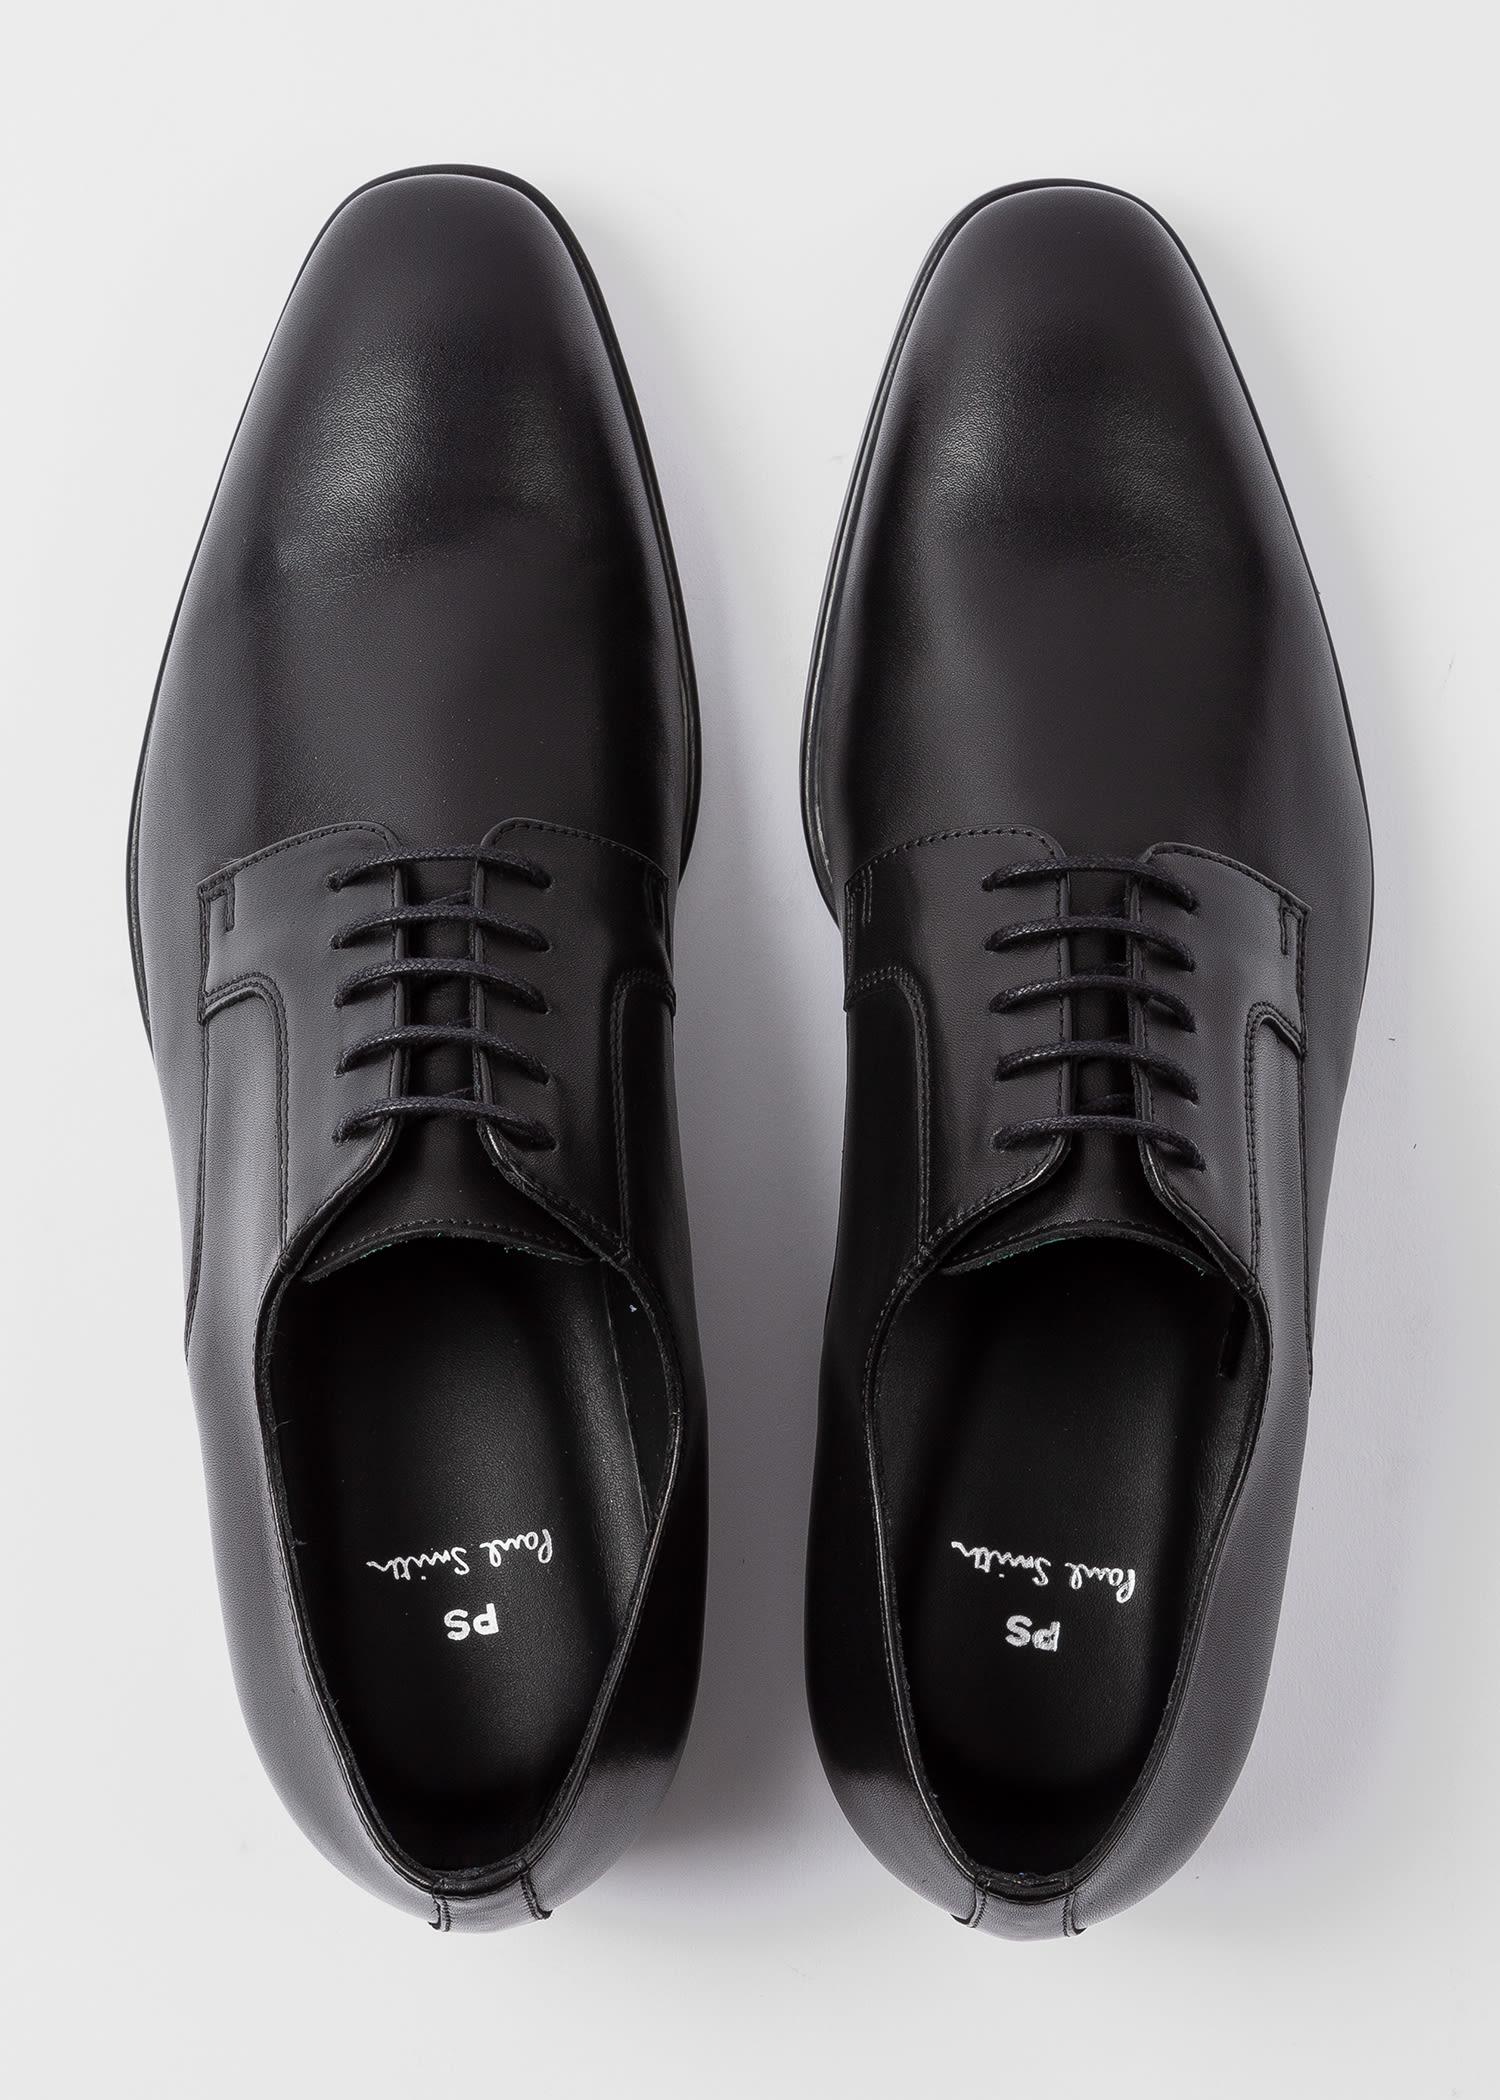 Paul Smith Black Leather 'daniel' Derby Shoes for Men - Lyst